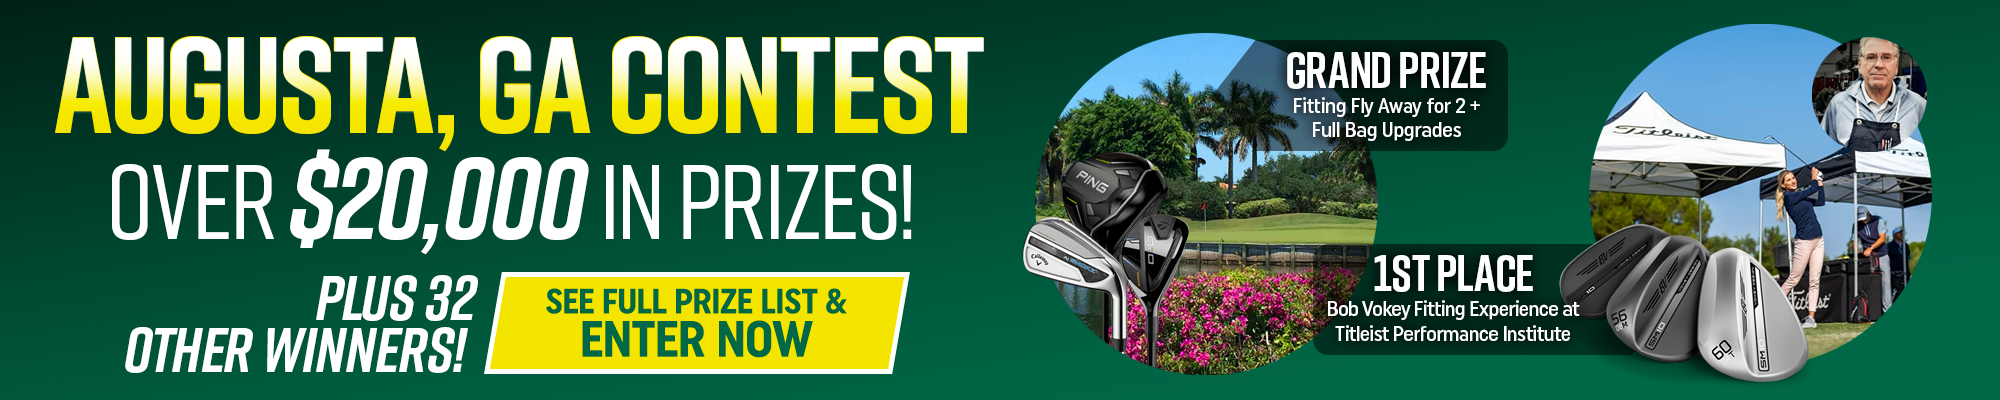 Augusta, GA Contest | Over $20,000 in Prizes!